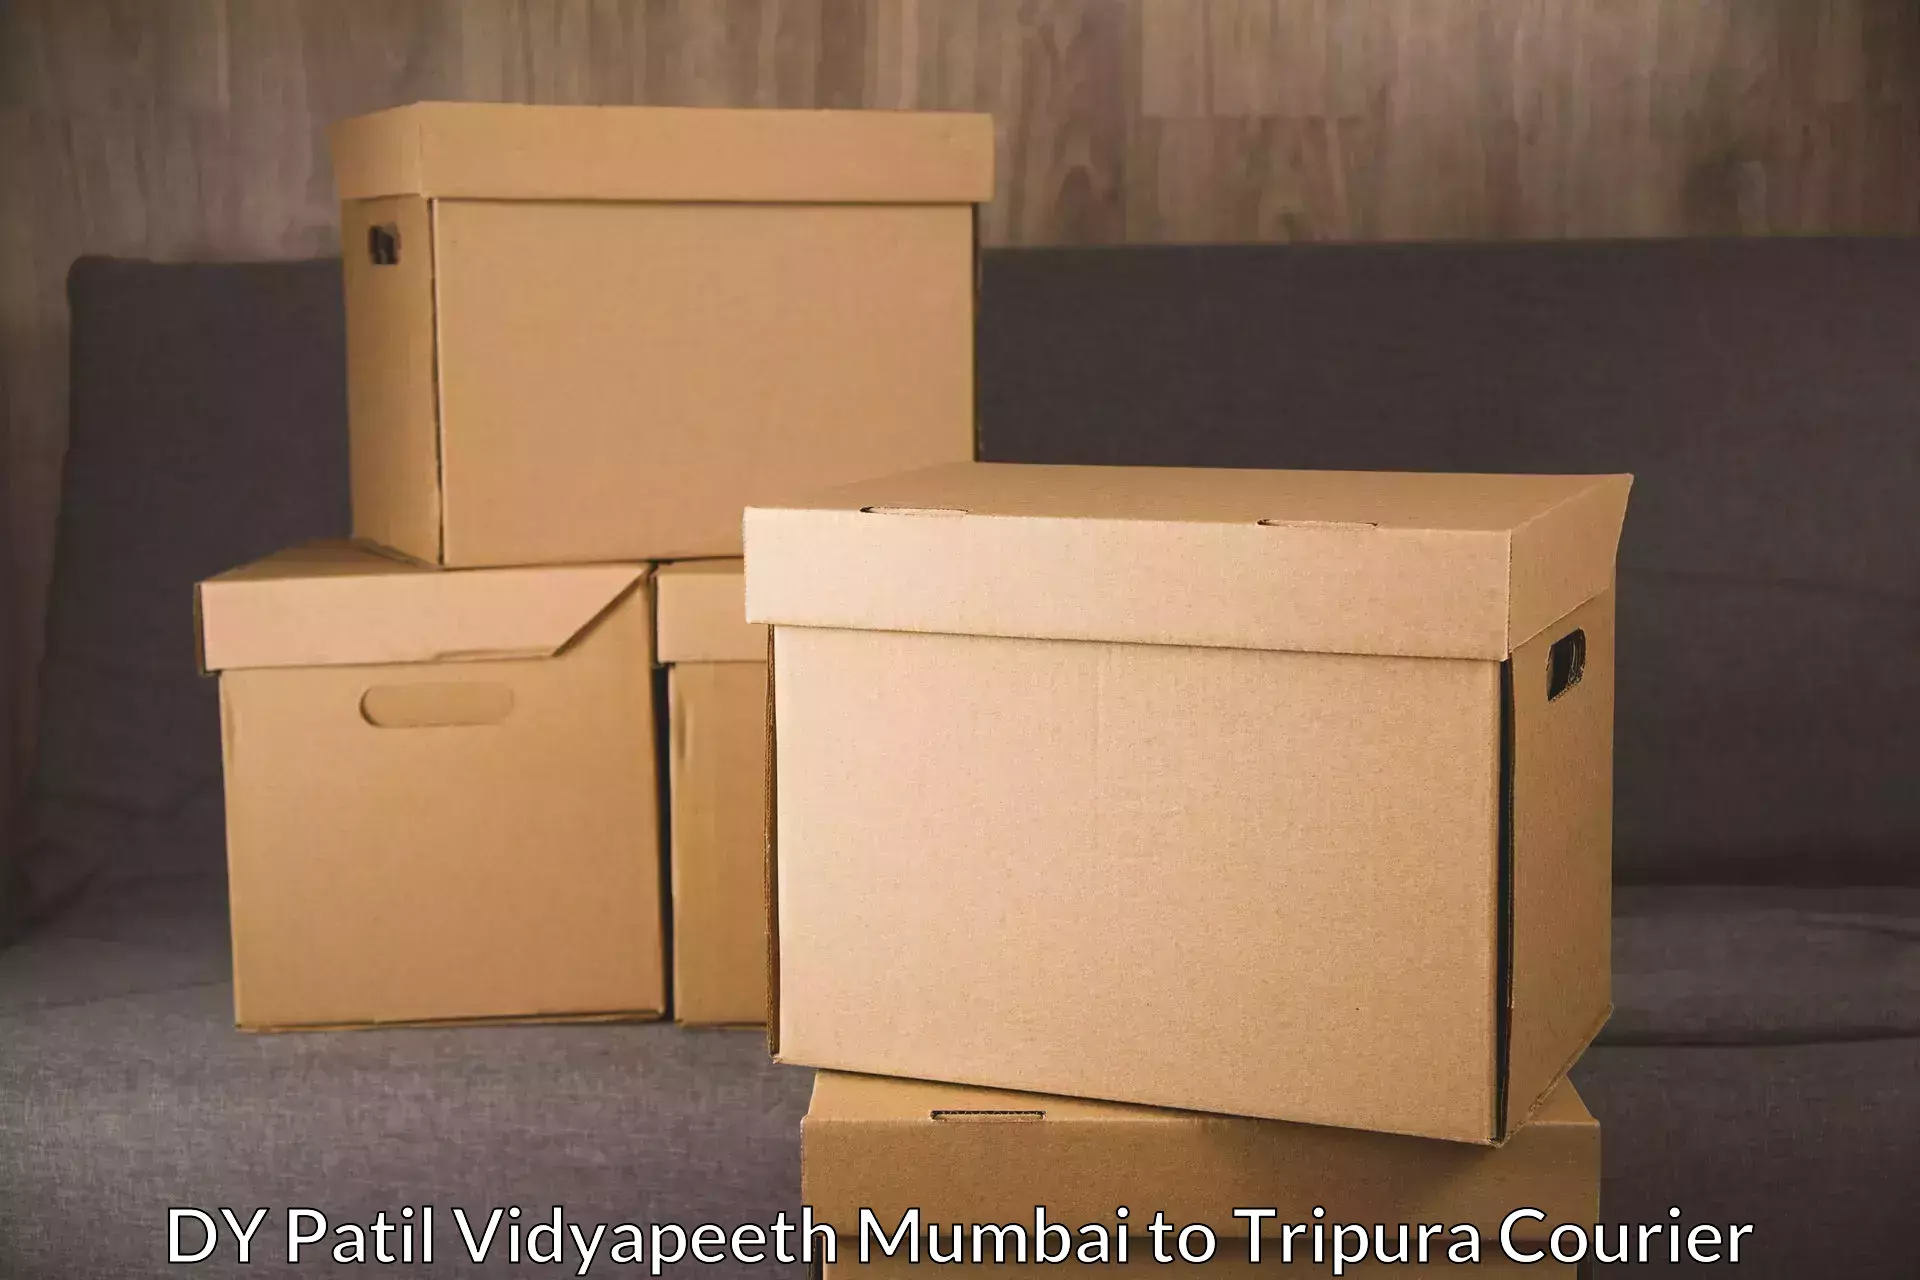 Quick parcel dispatch in DY Patil Vidyapeeth Mumbai to Udaipur Tripura